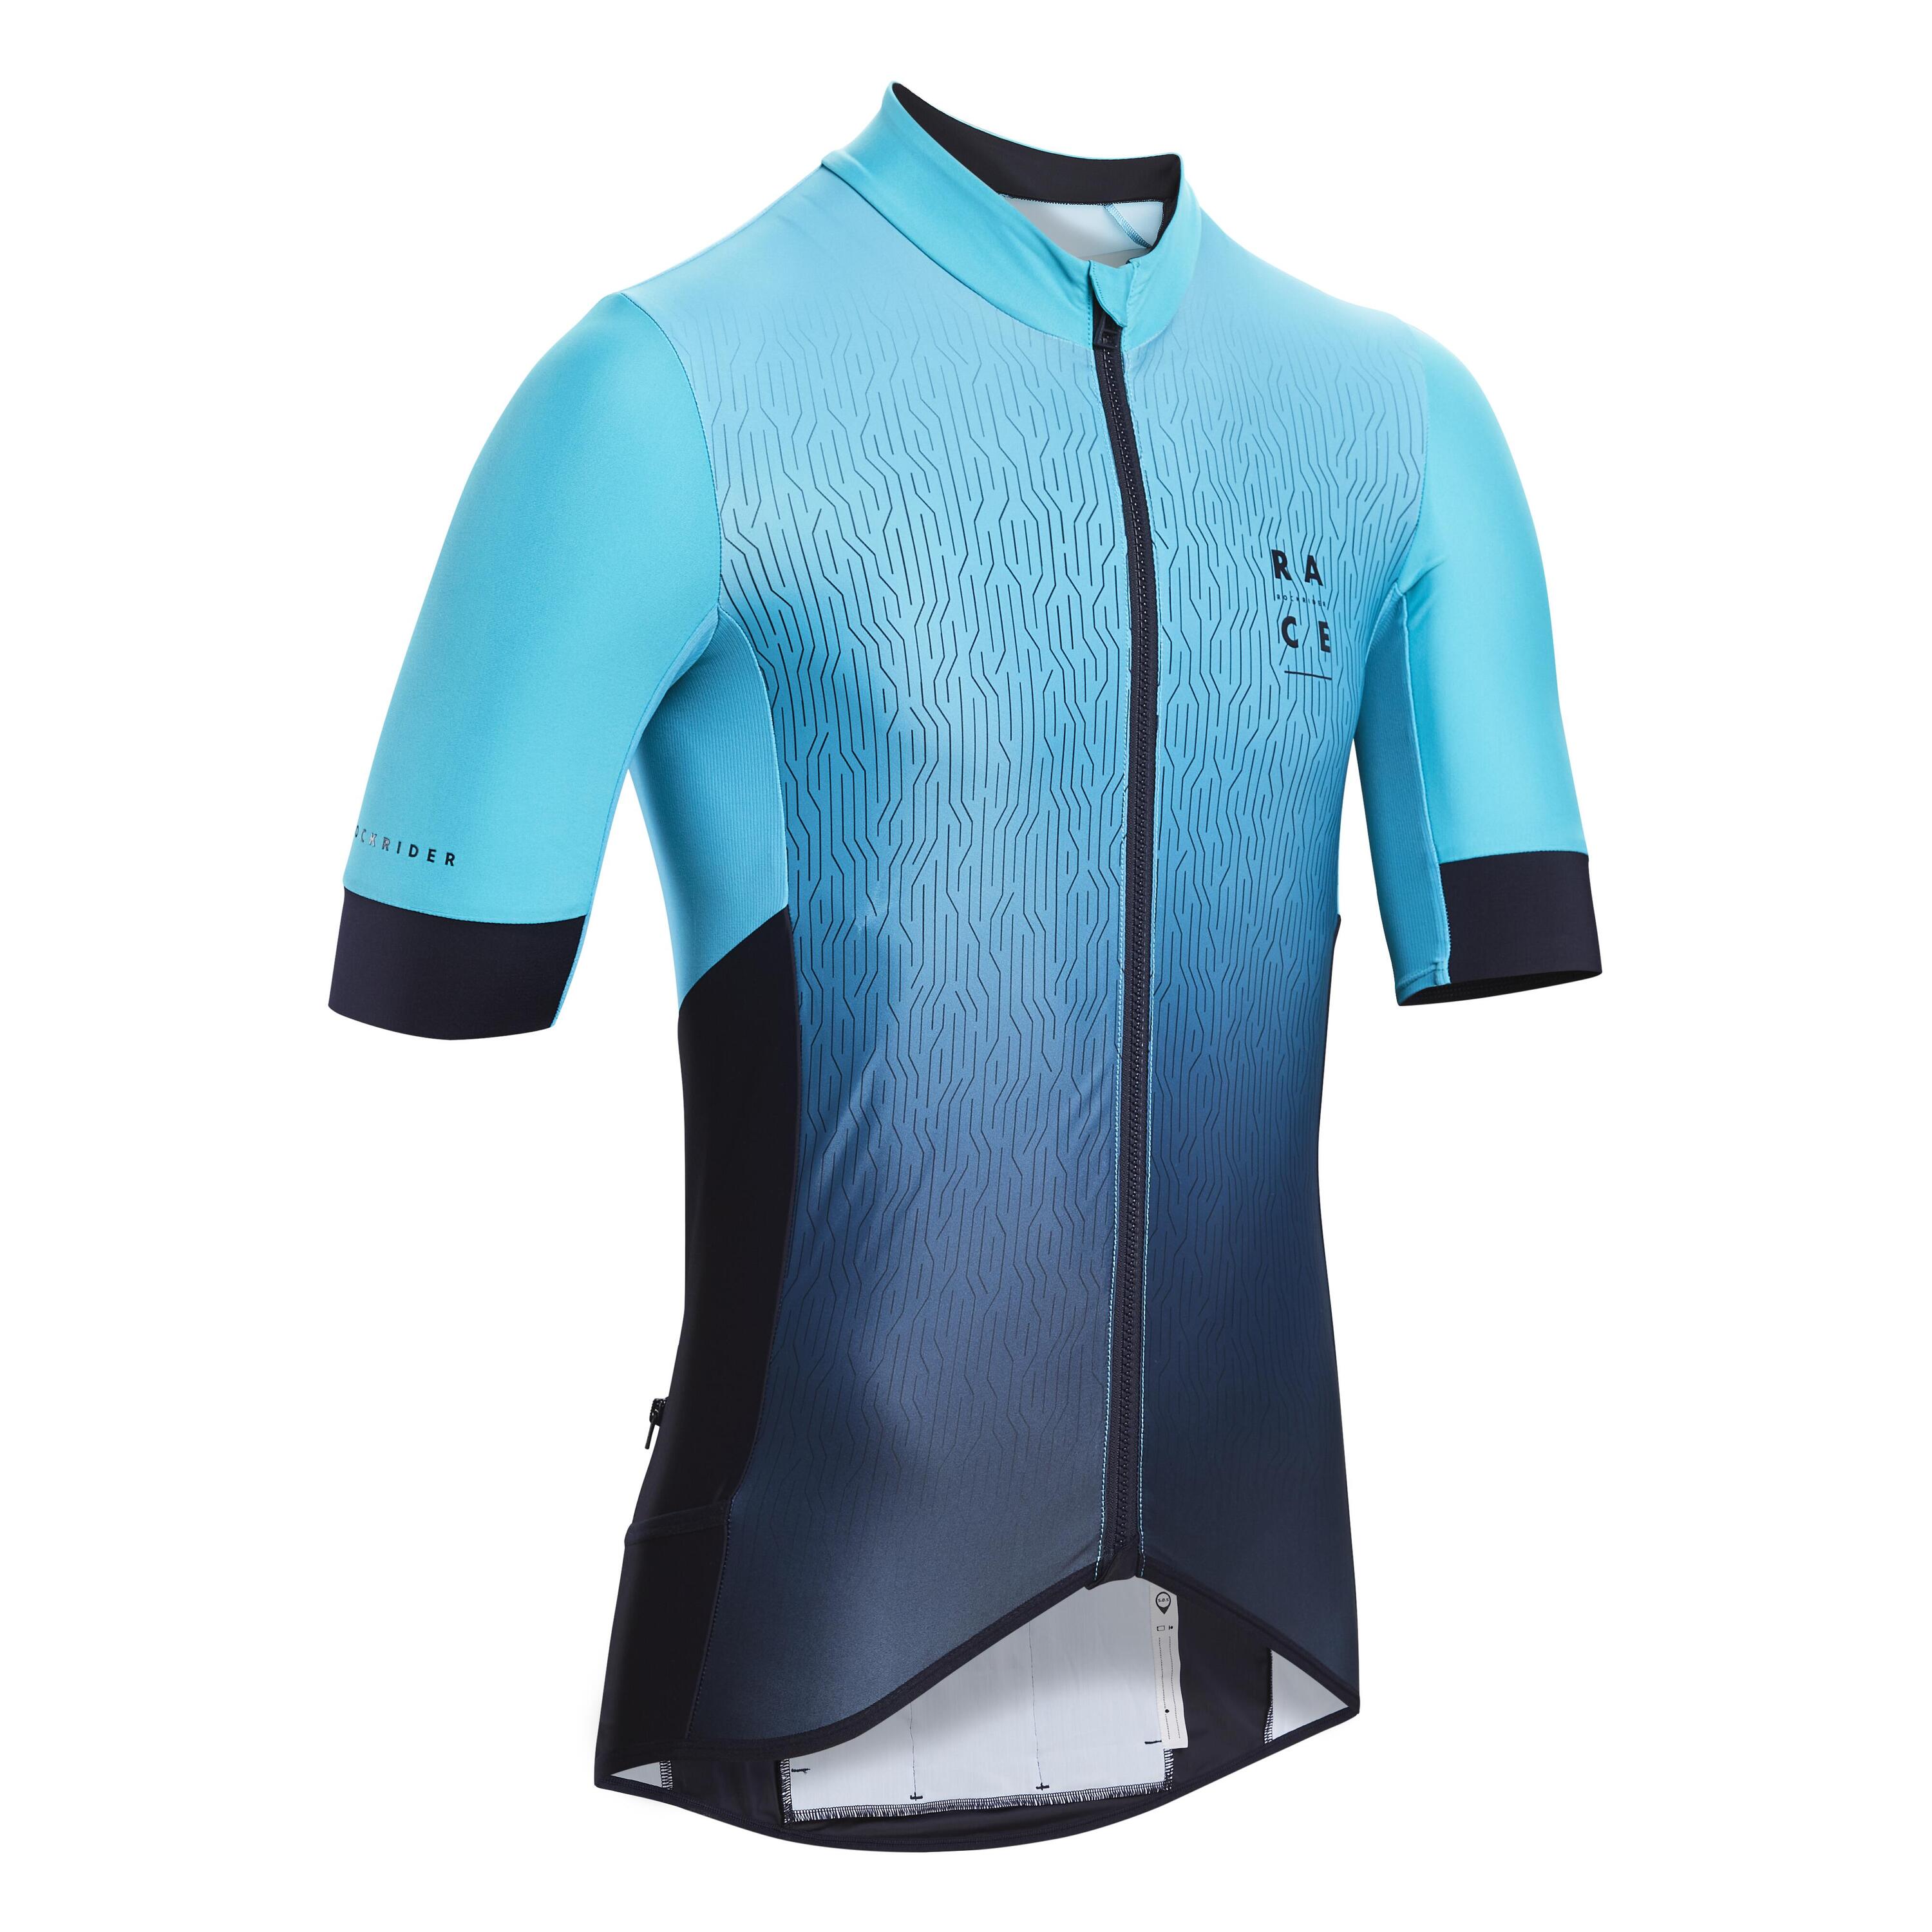 Men's Short-Sleeved Mountain Biking Jersey - Turquoise 5/10